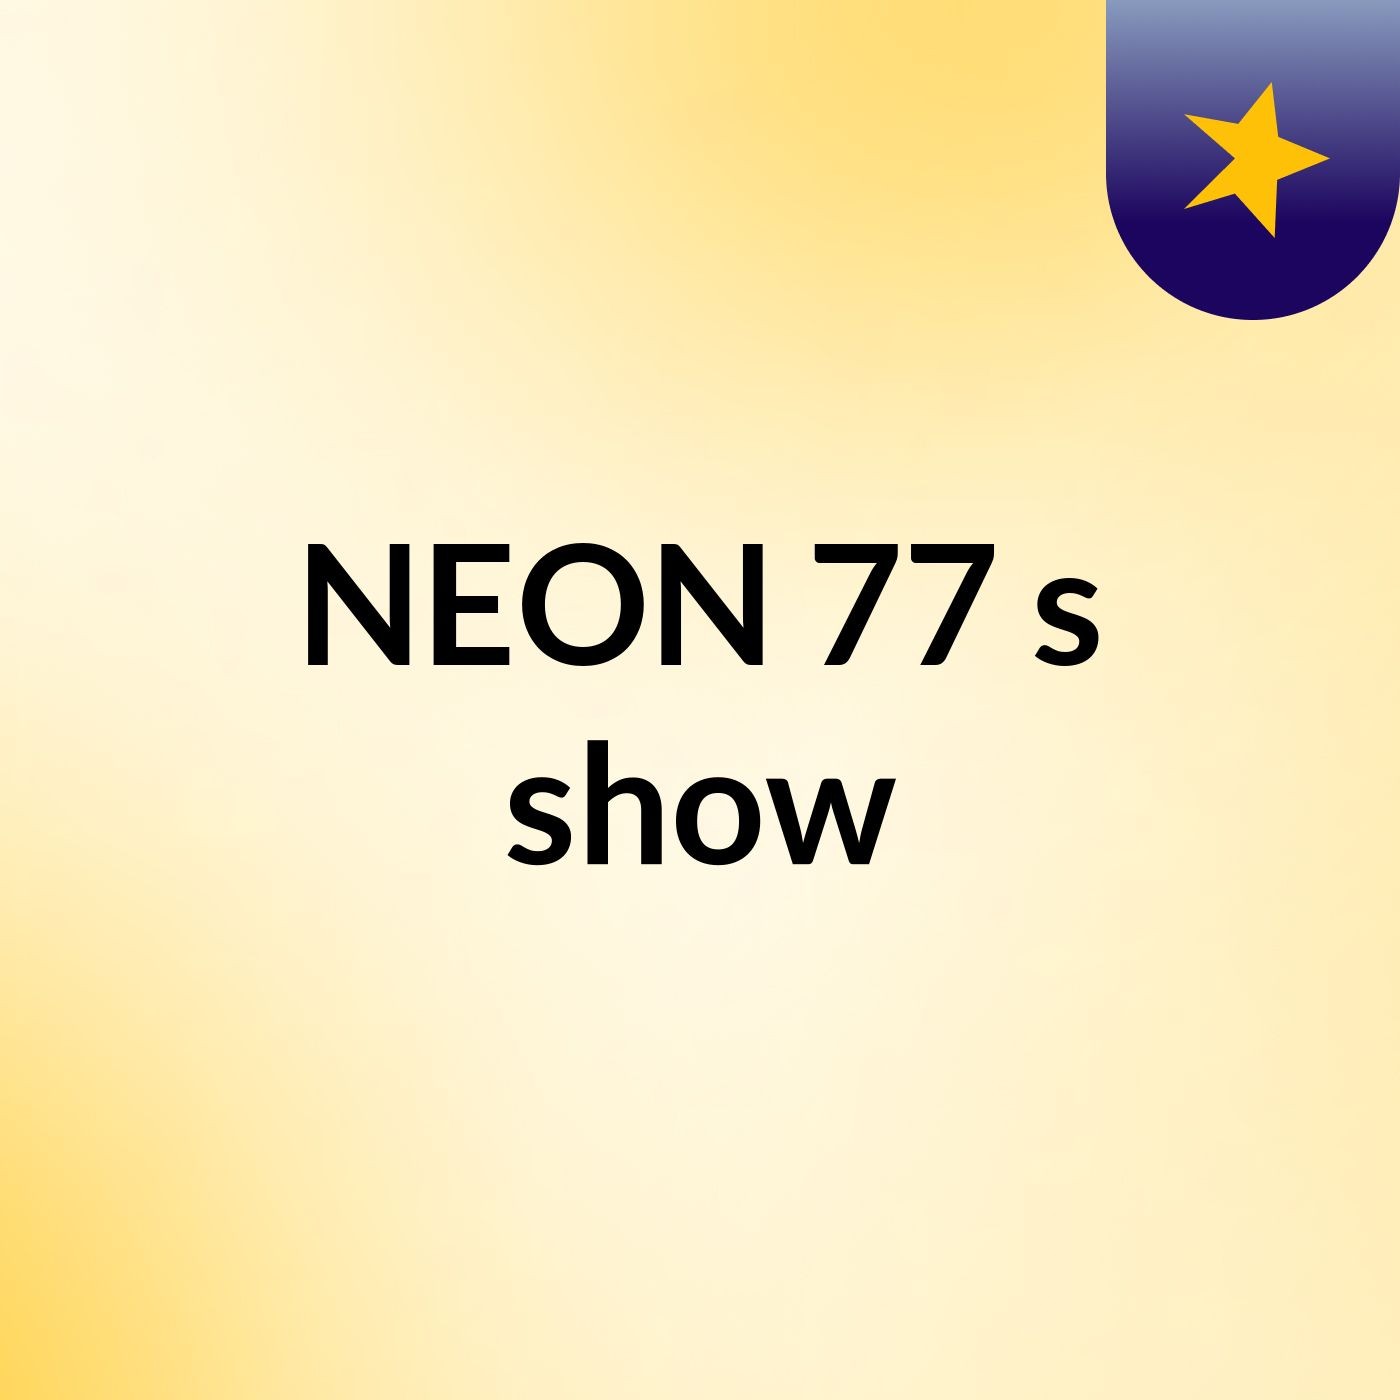 NEON 77's show